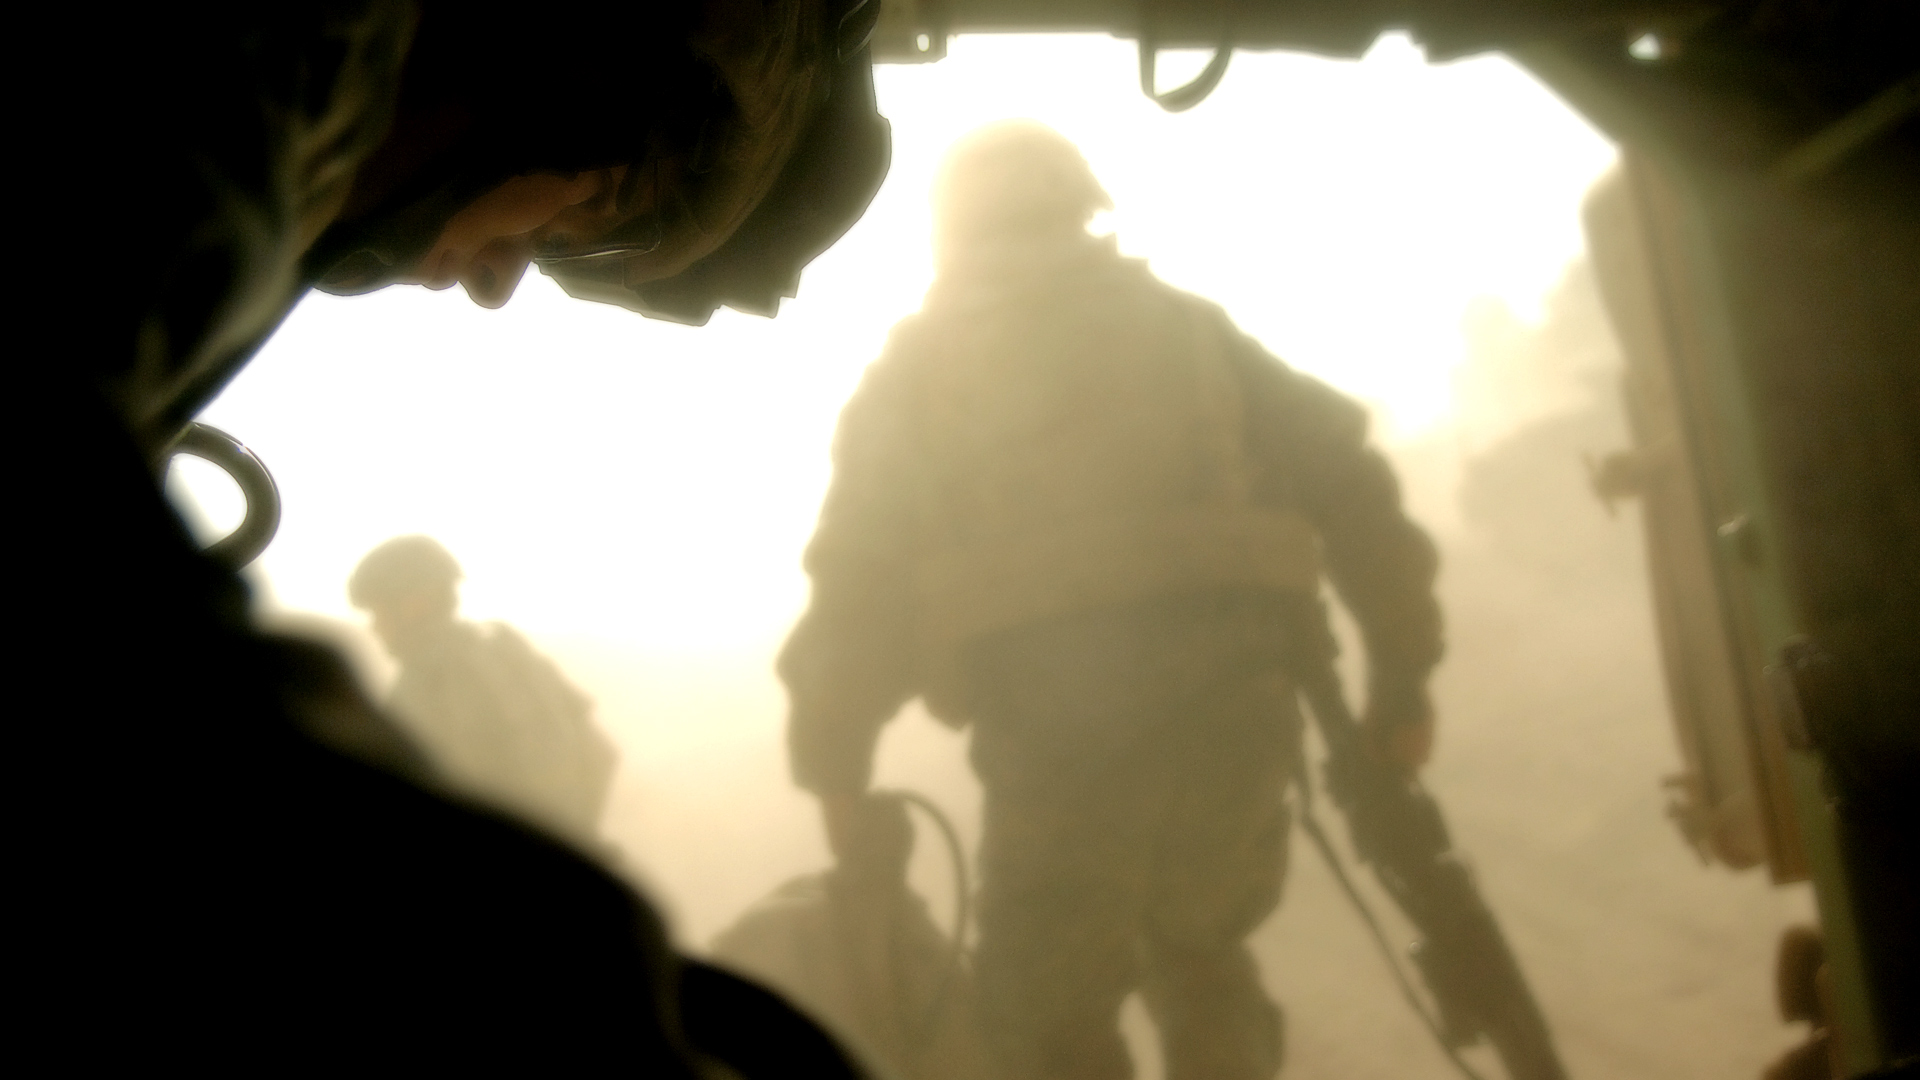 soldiers, guns, army, dust, low-angle shot - desktop wallpaper